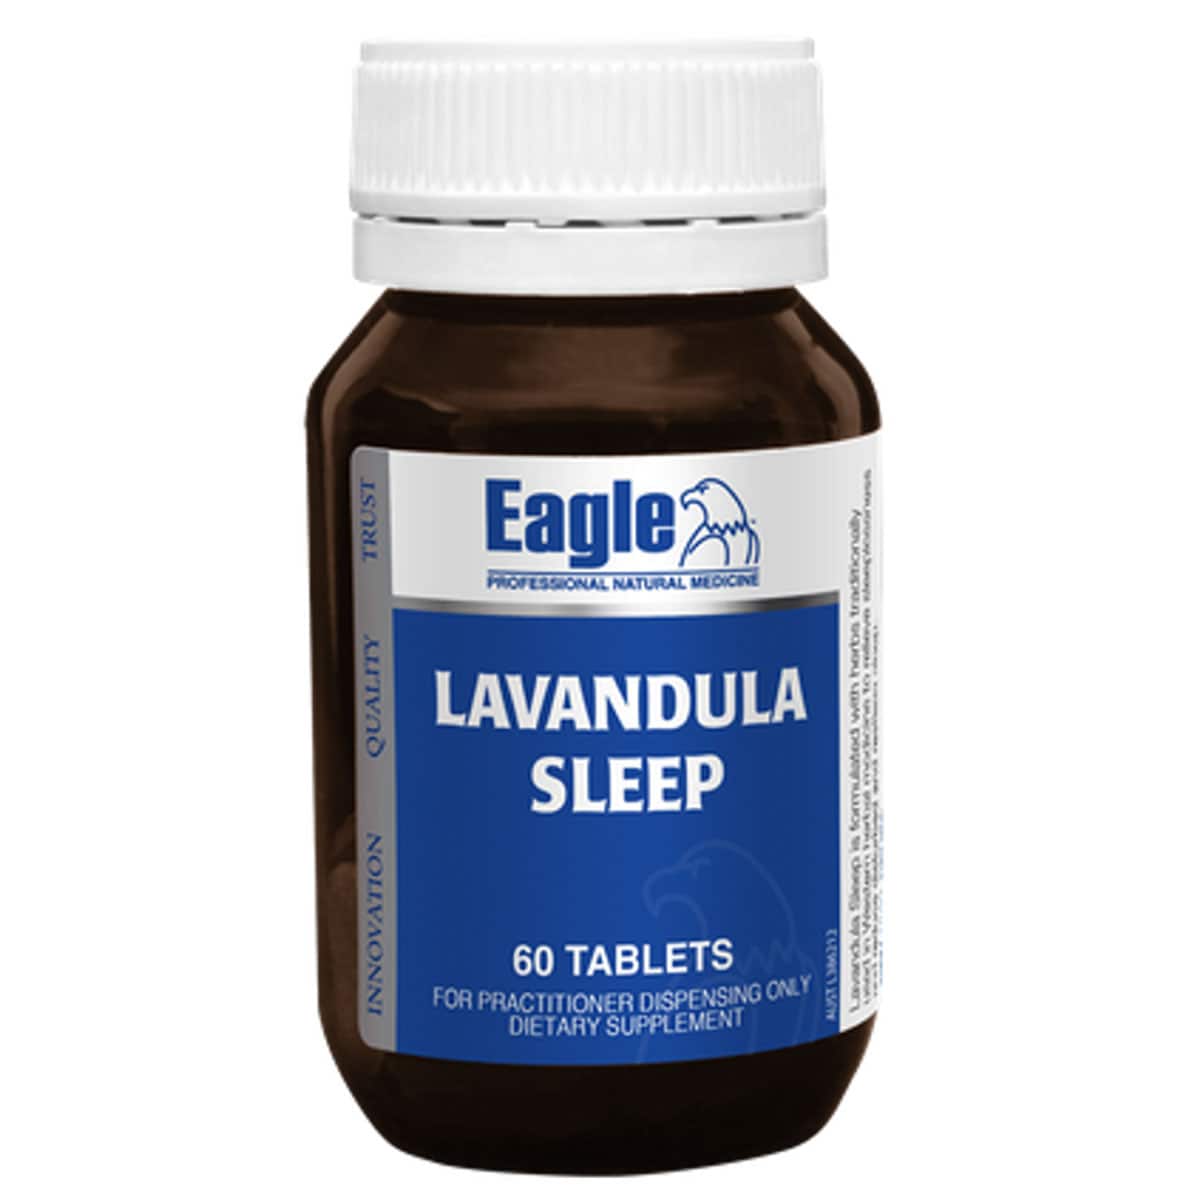 Eagle Lavandula Sleep 60 Tablets